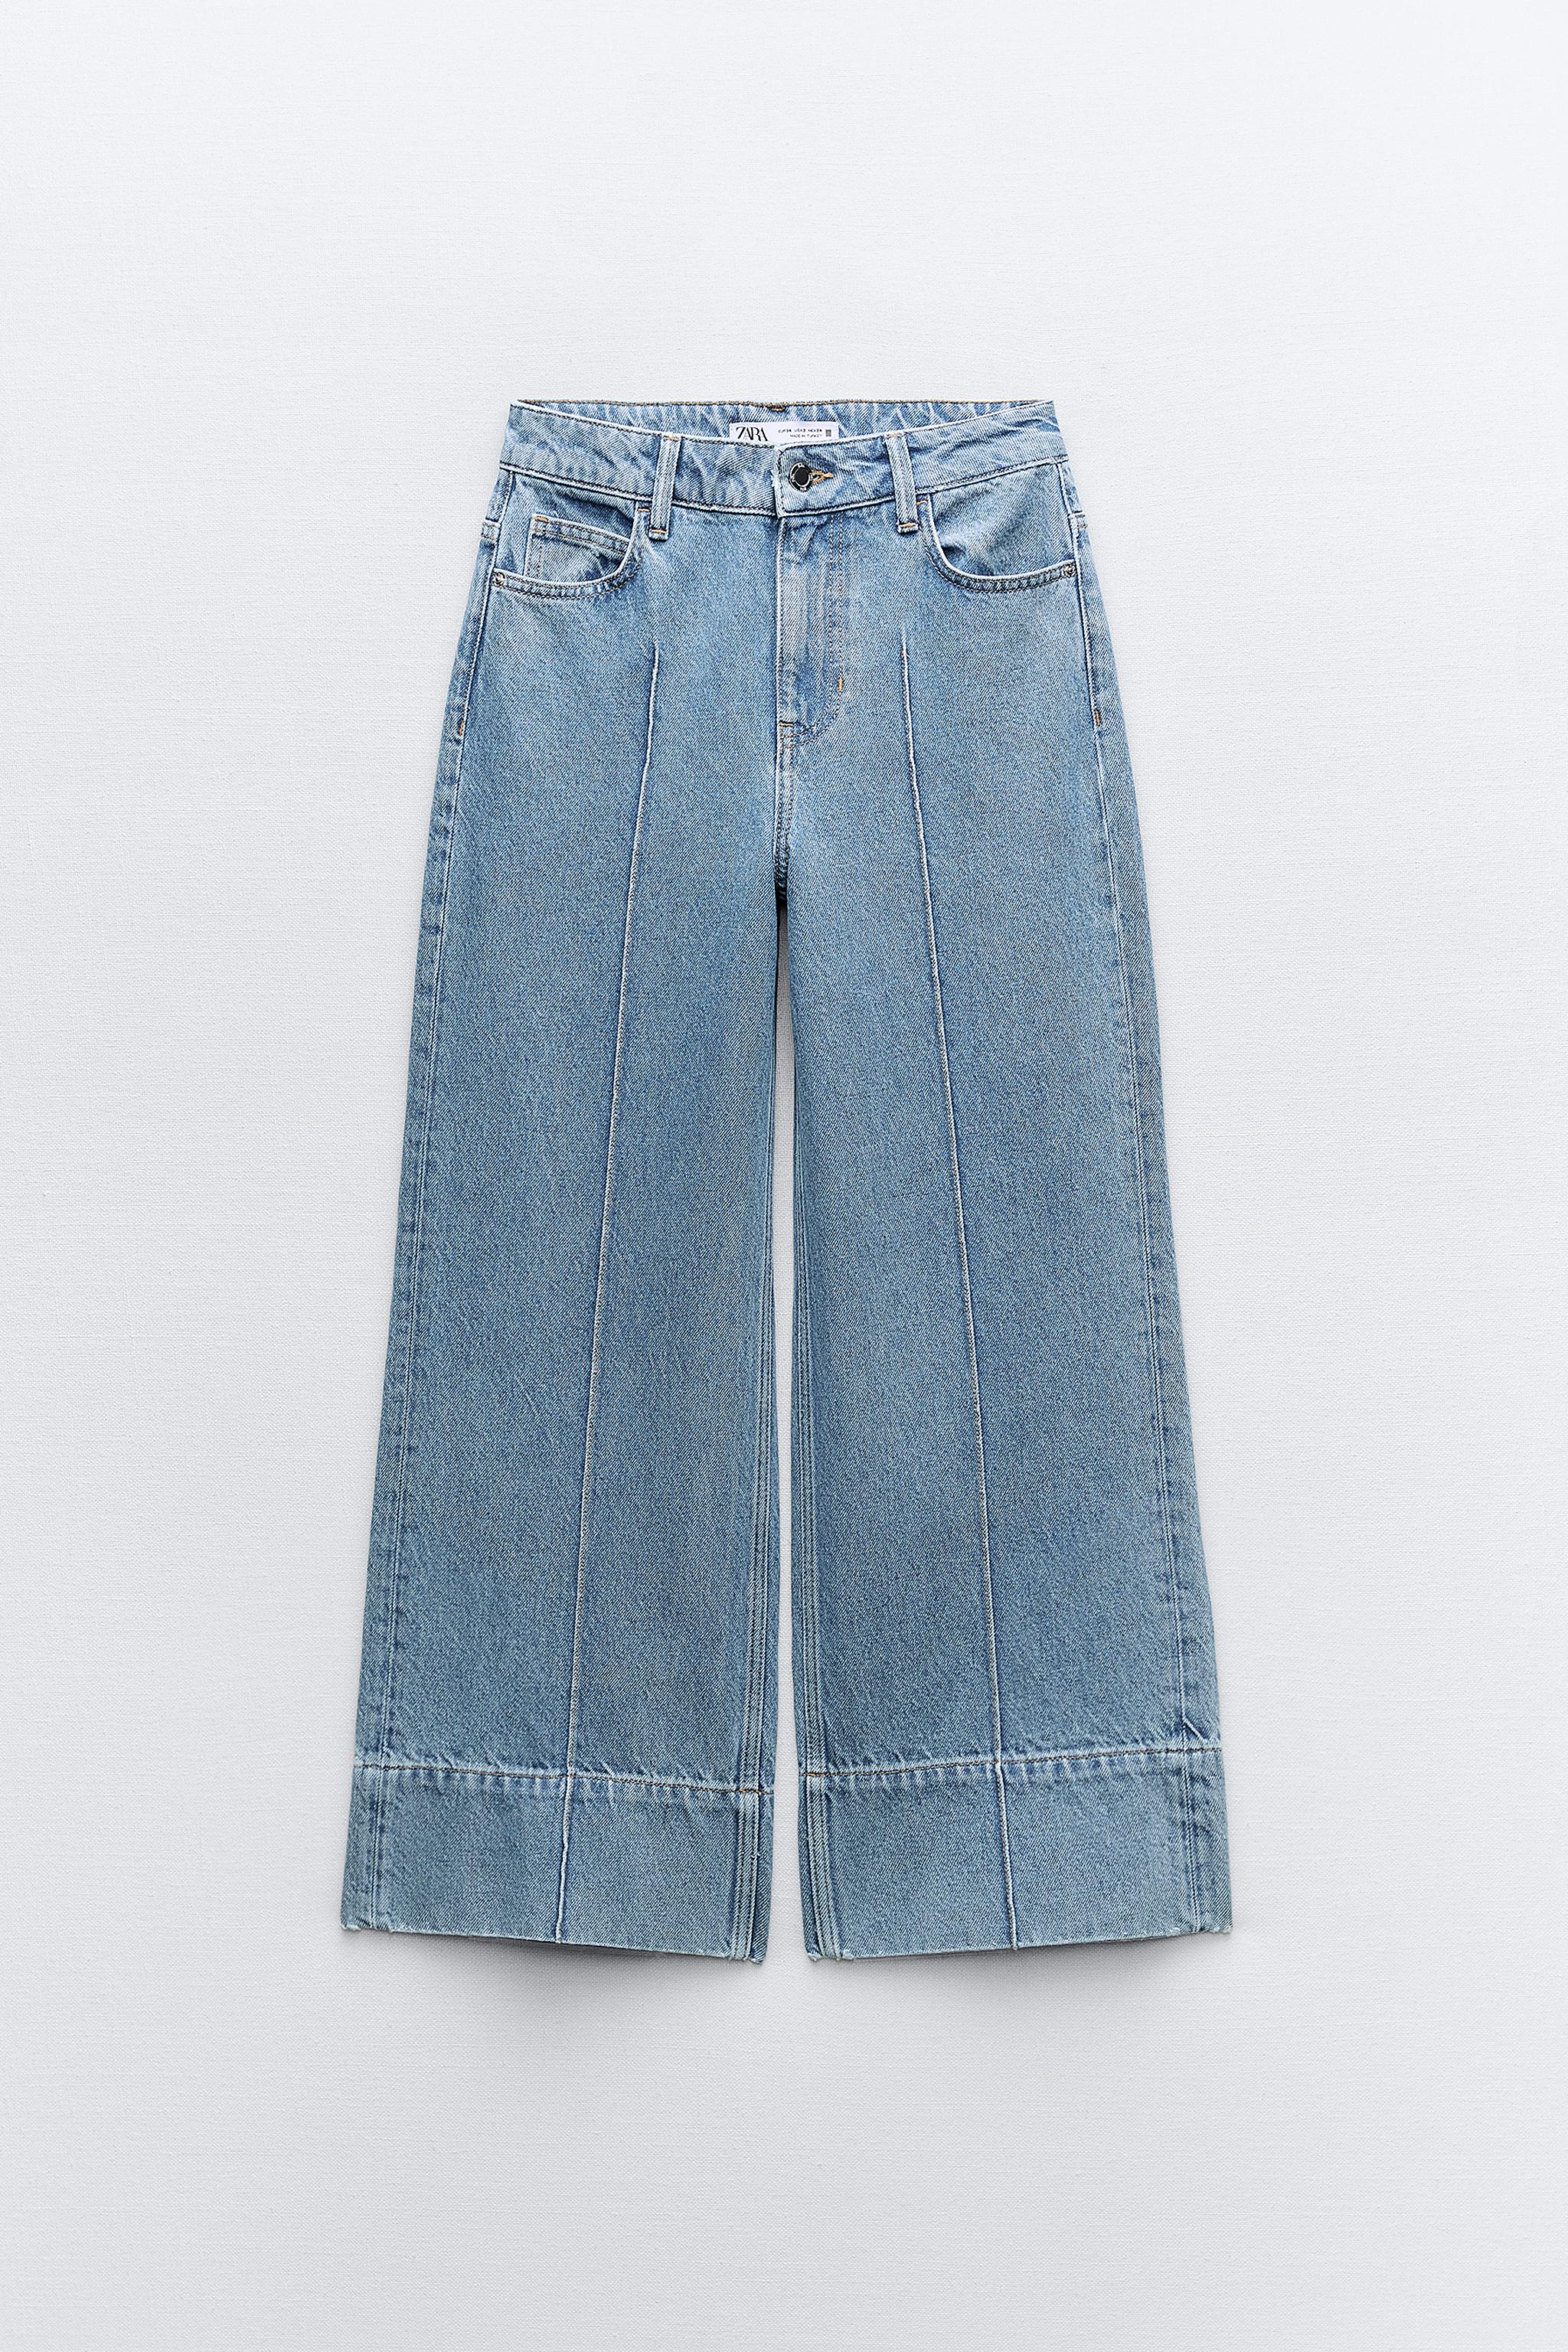 Z1975 WIDE-LEG CROPPED 高腰正面接縫牛仔褲- 藍色| ZARA Taiwan 